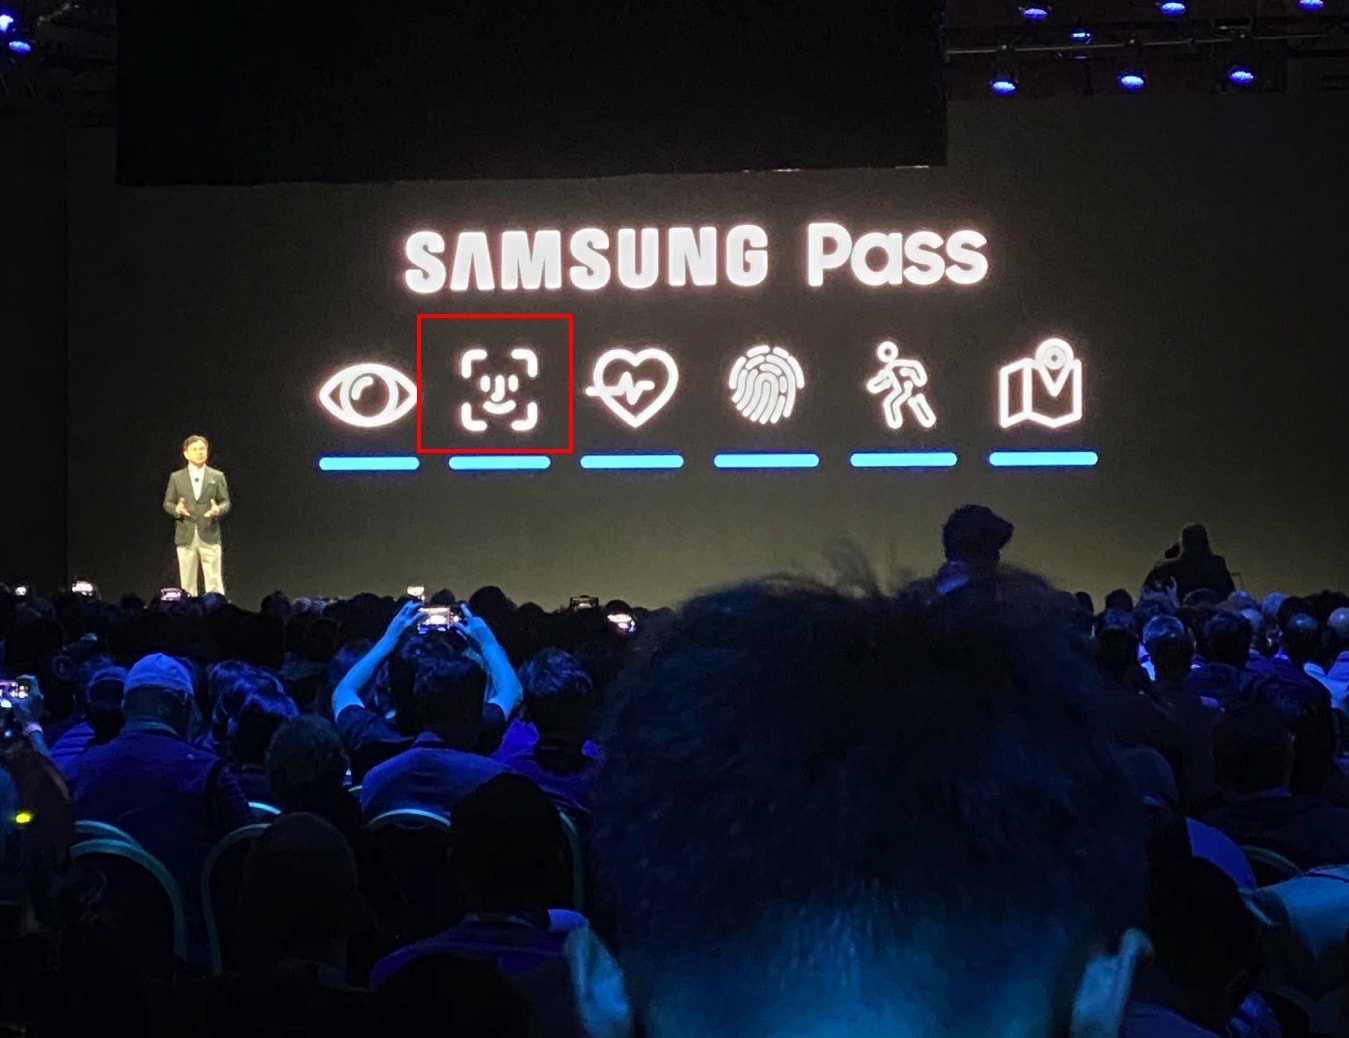 Samsung Pass logo